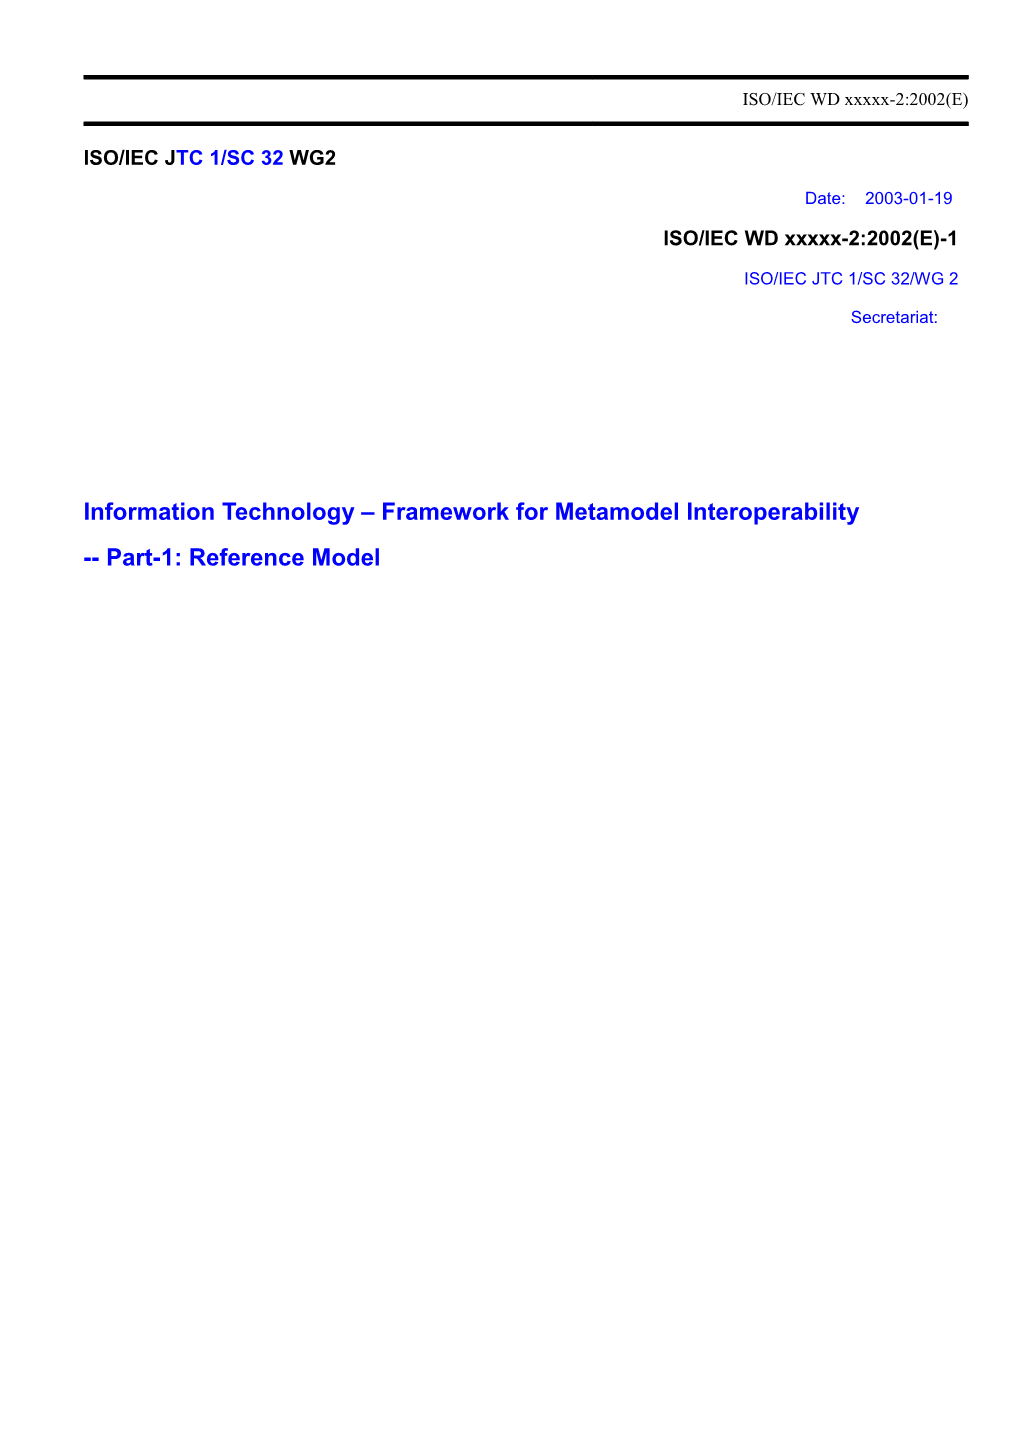 Information Technology Framework for Metamodel Interoperability